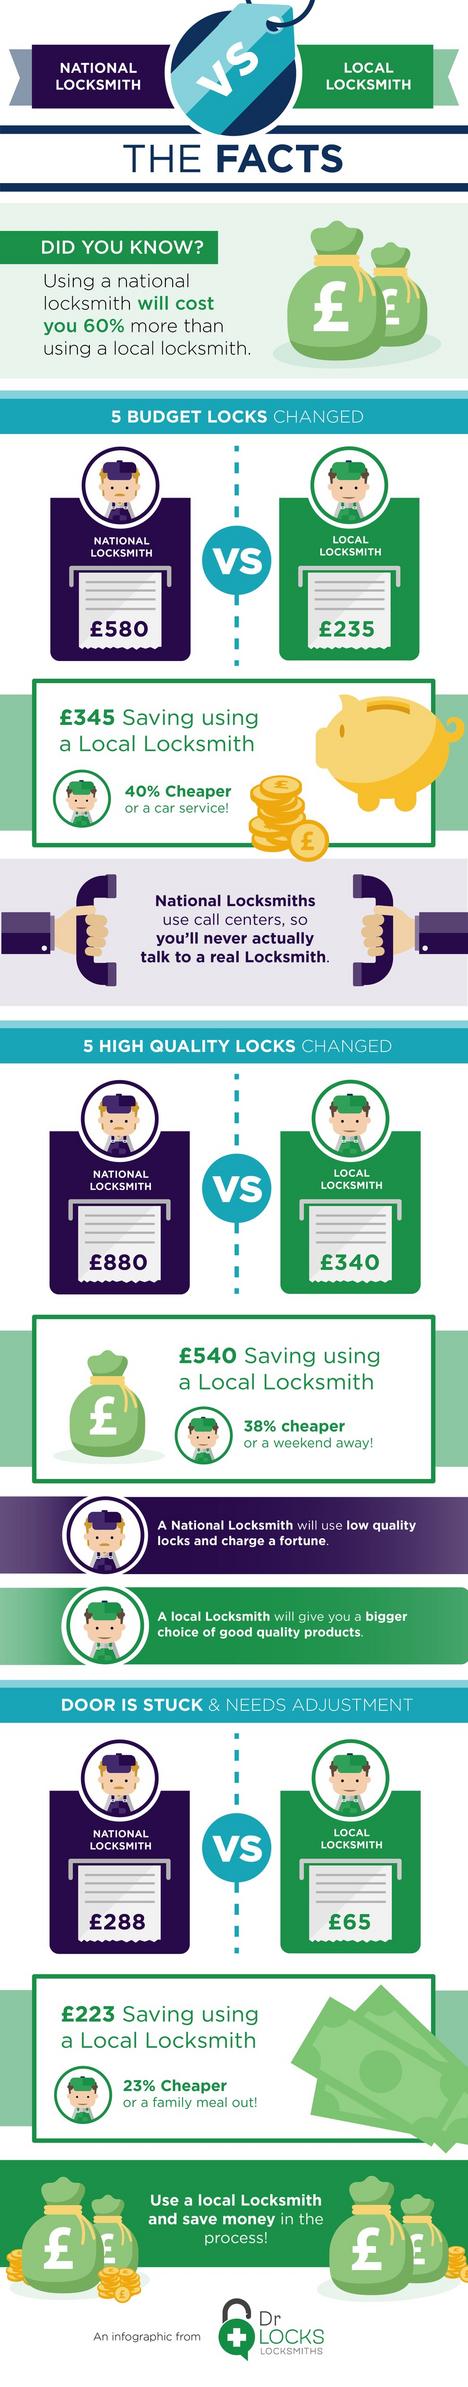 National Locksmith vs Local Locksmith: The Facts